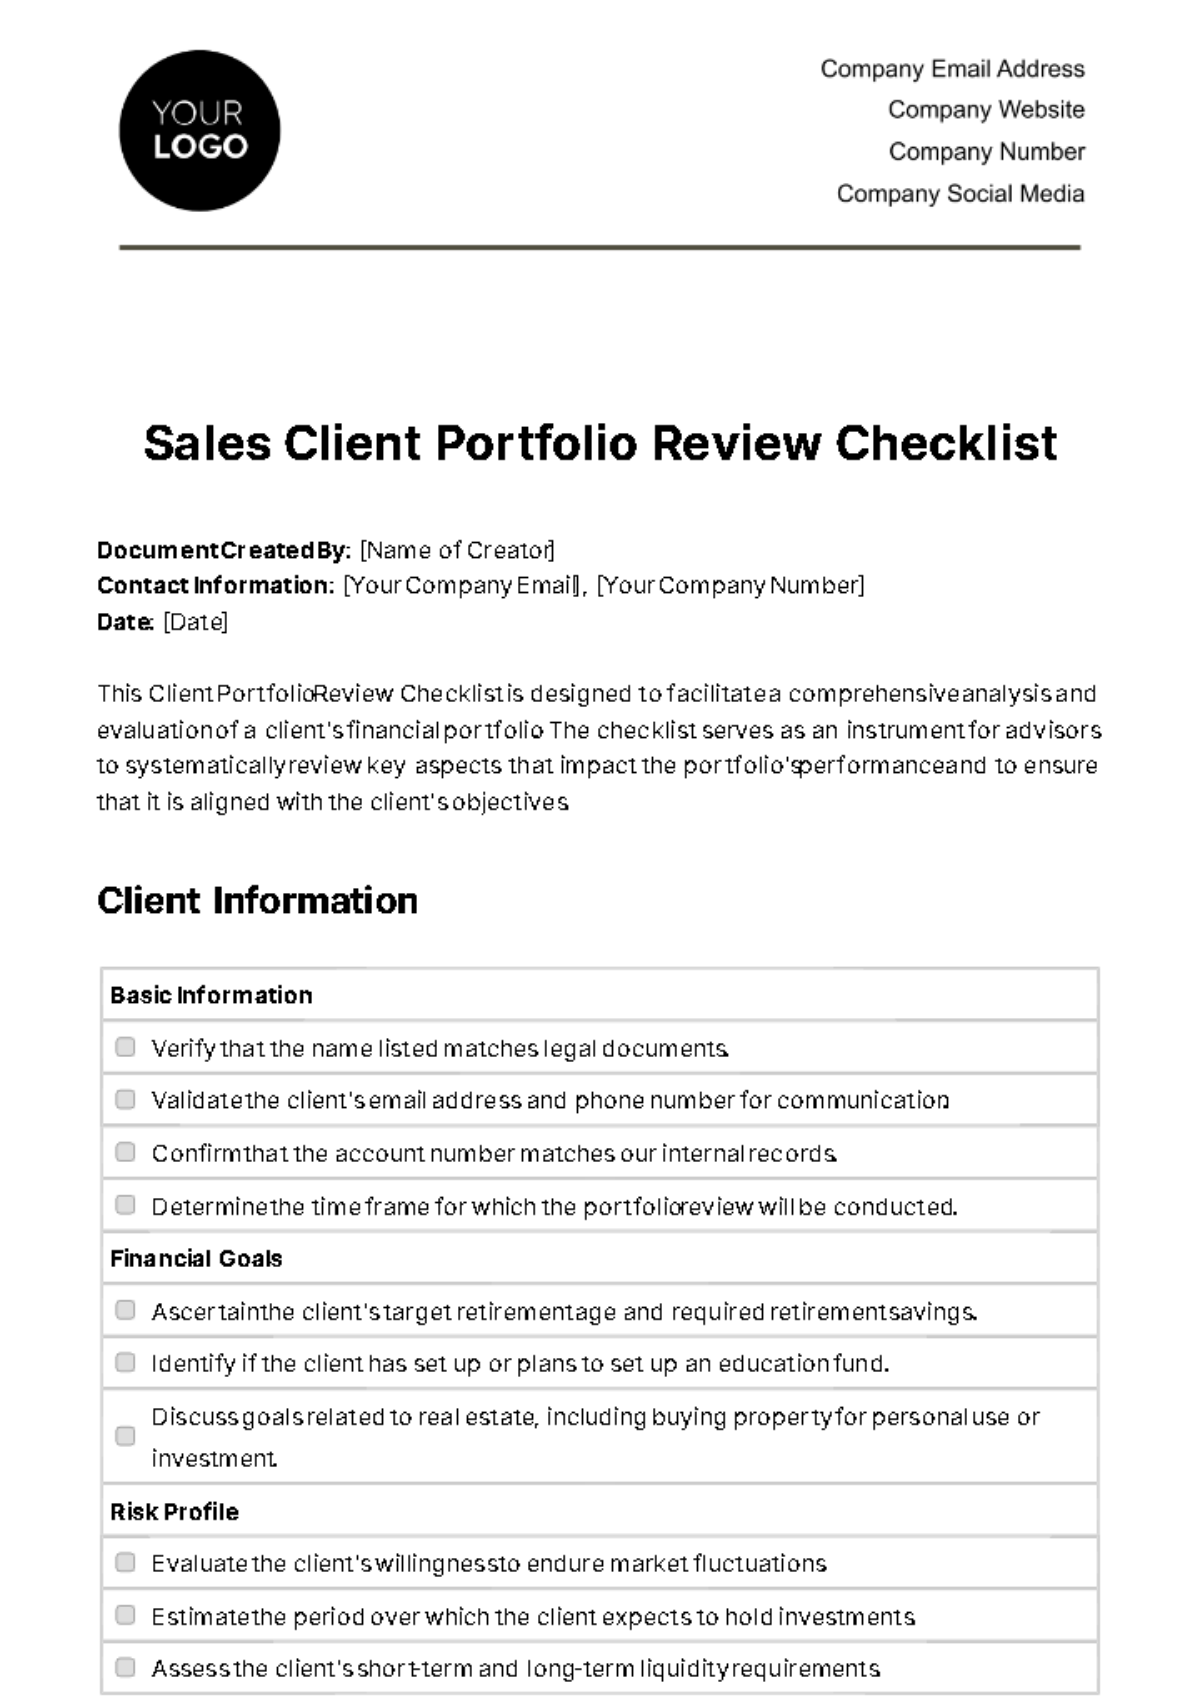 Free Sales Client Portfolio Review Checklist Template